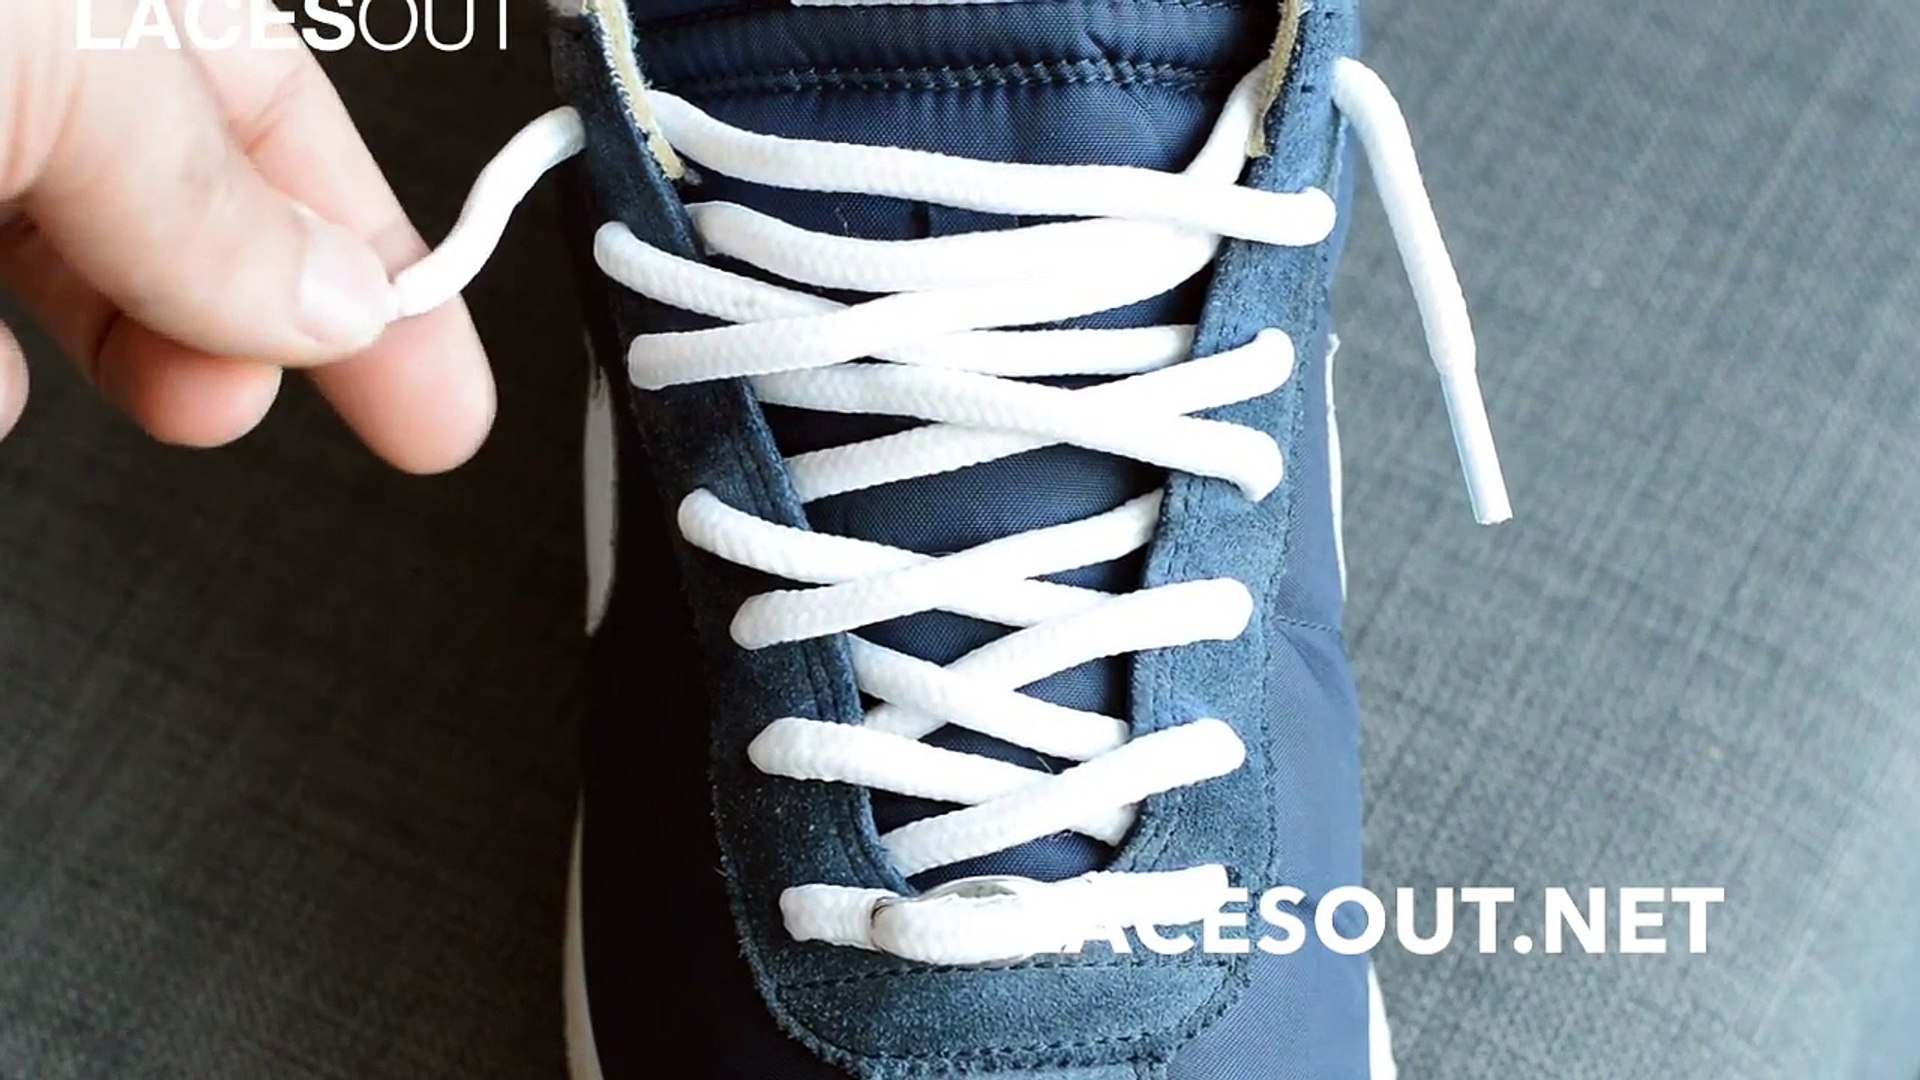 Nike Cortez Shoelaces - Sizing, Color, Lace Swap Ideas - video Dailymotion